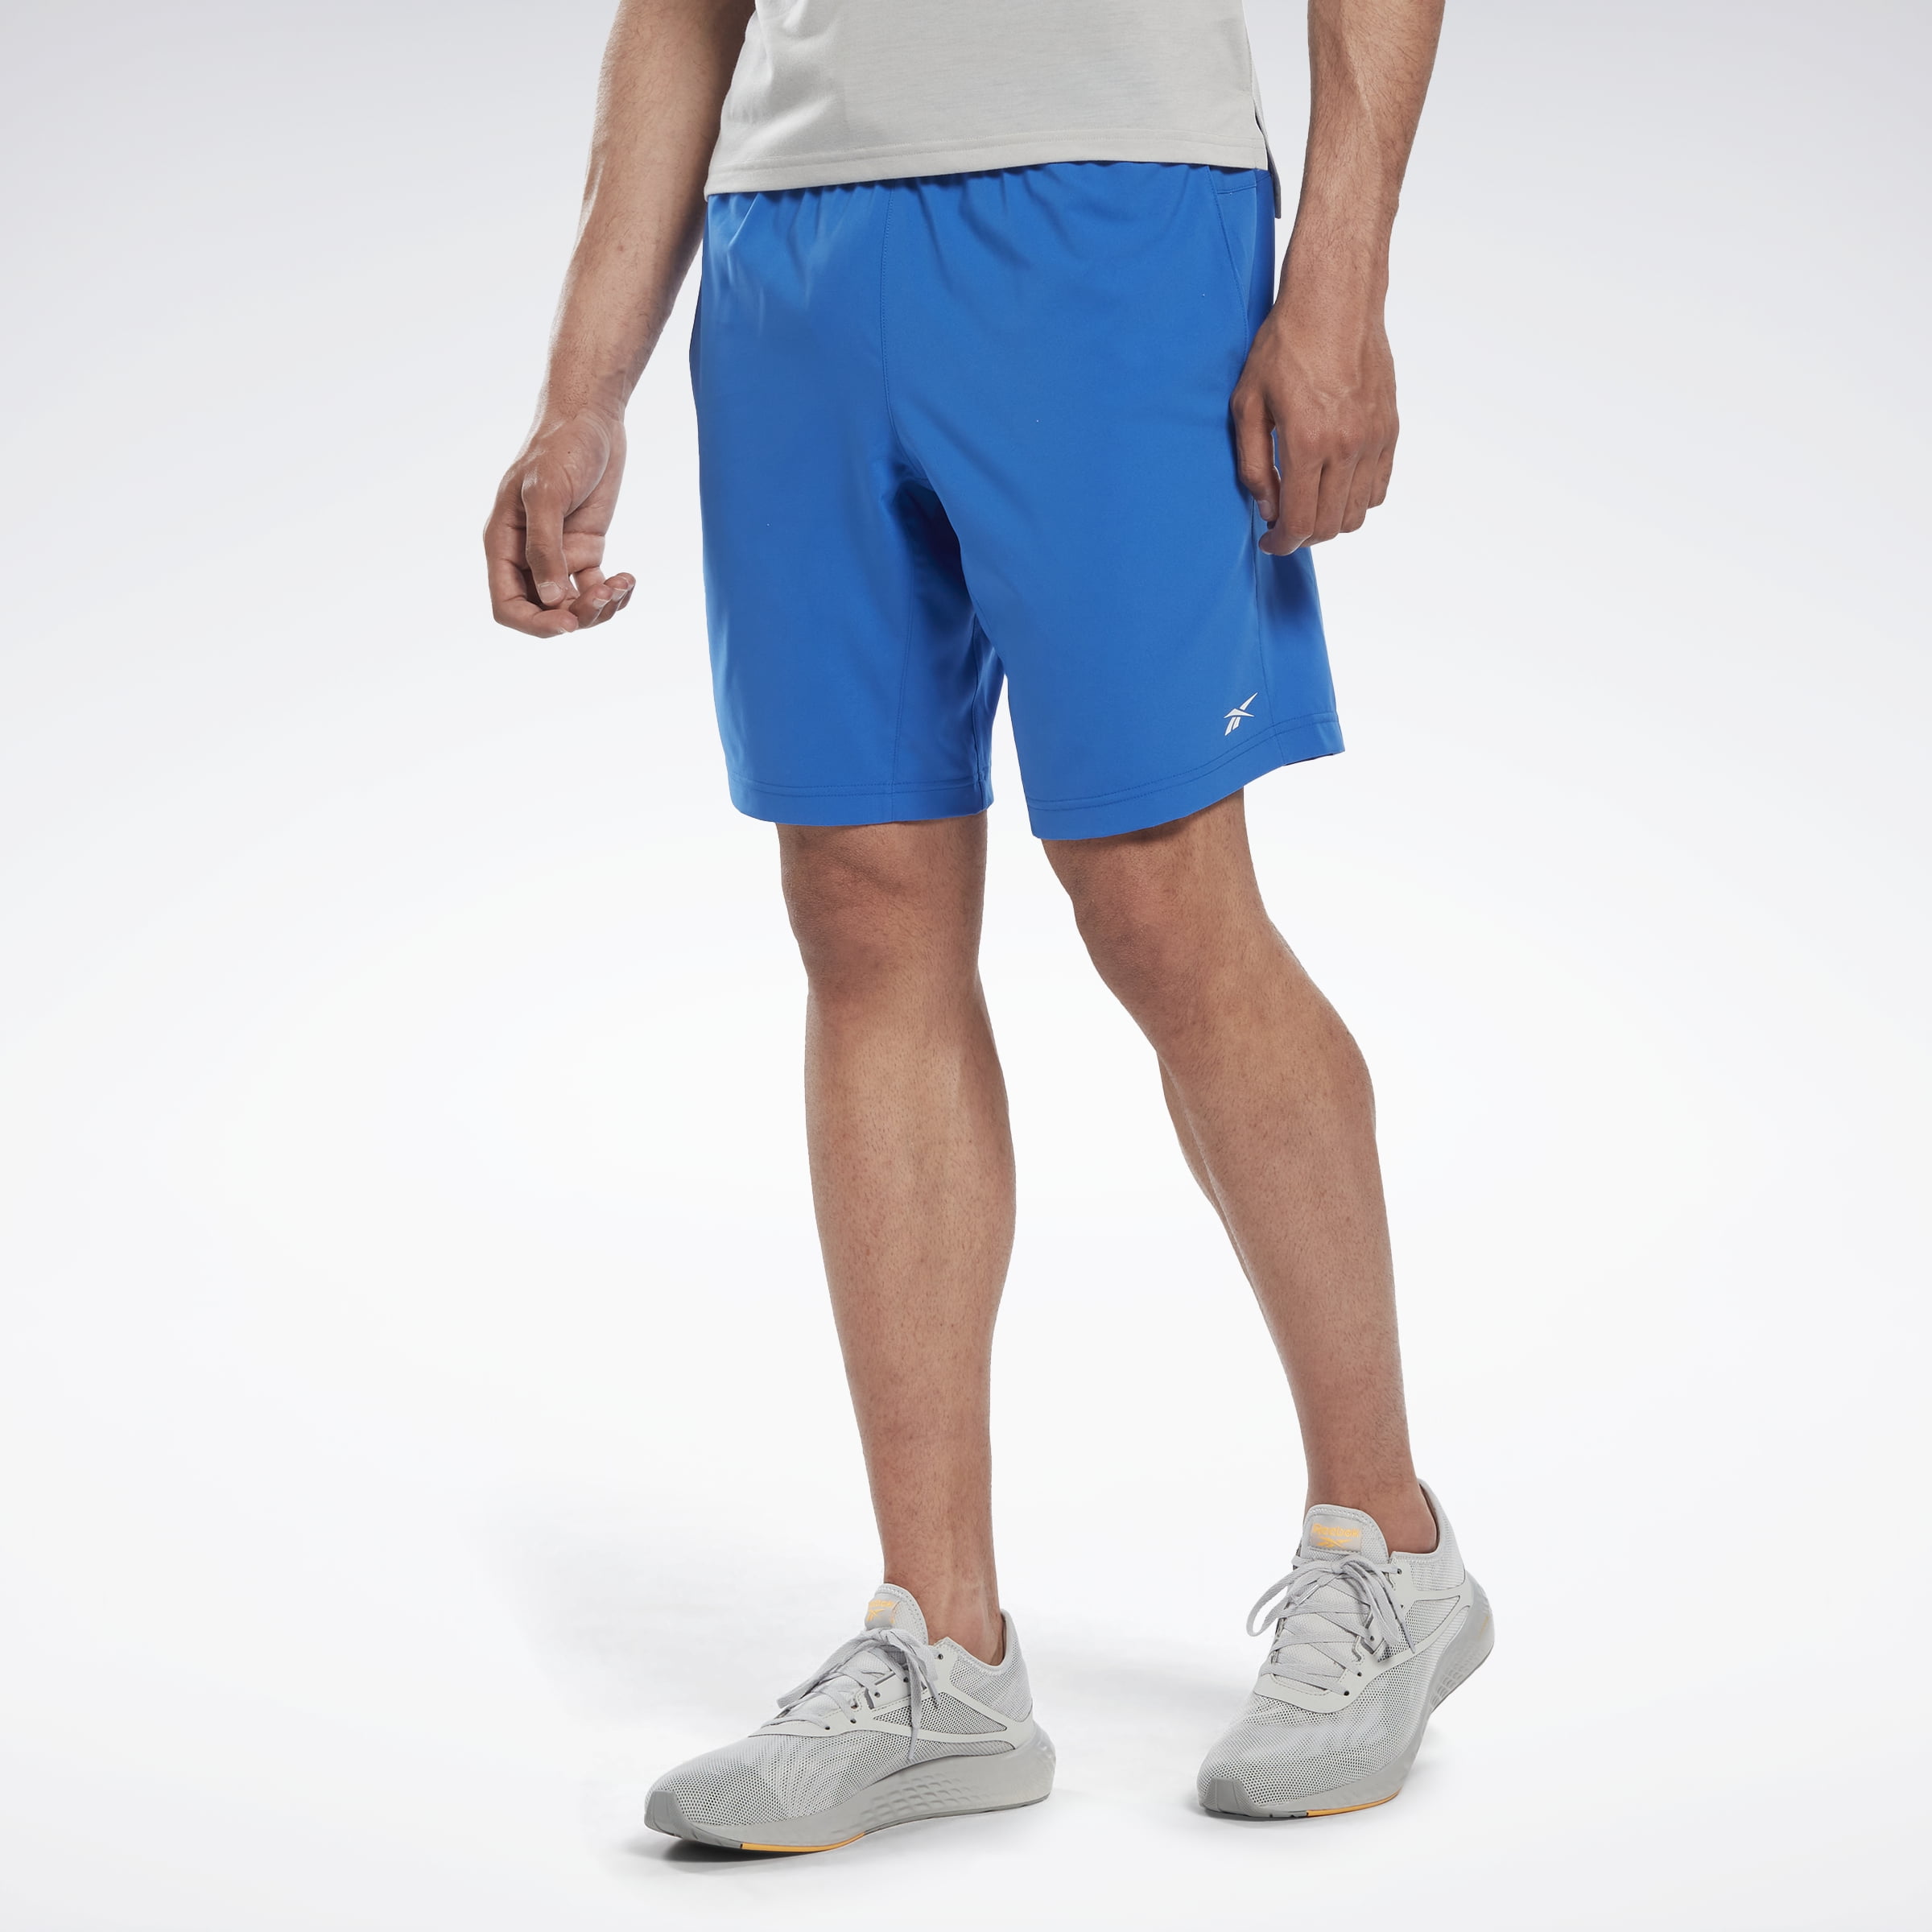 Reebok Men's Workout Ready Shorts - Walmart.com